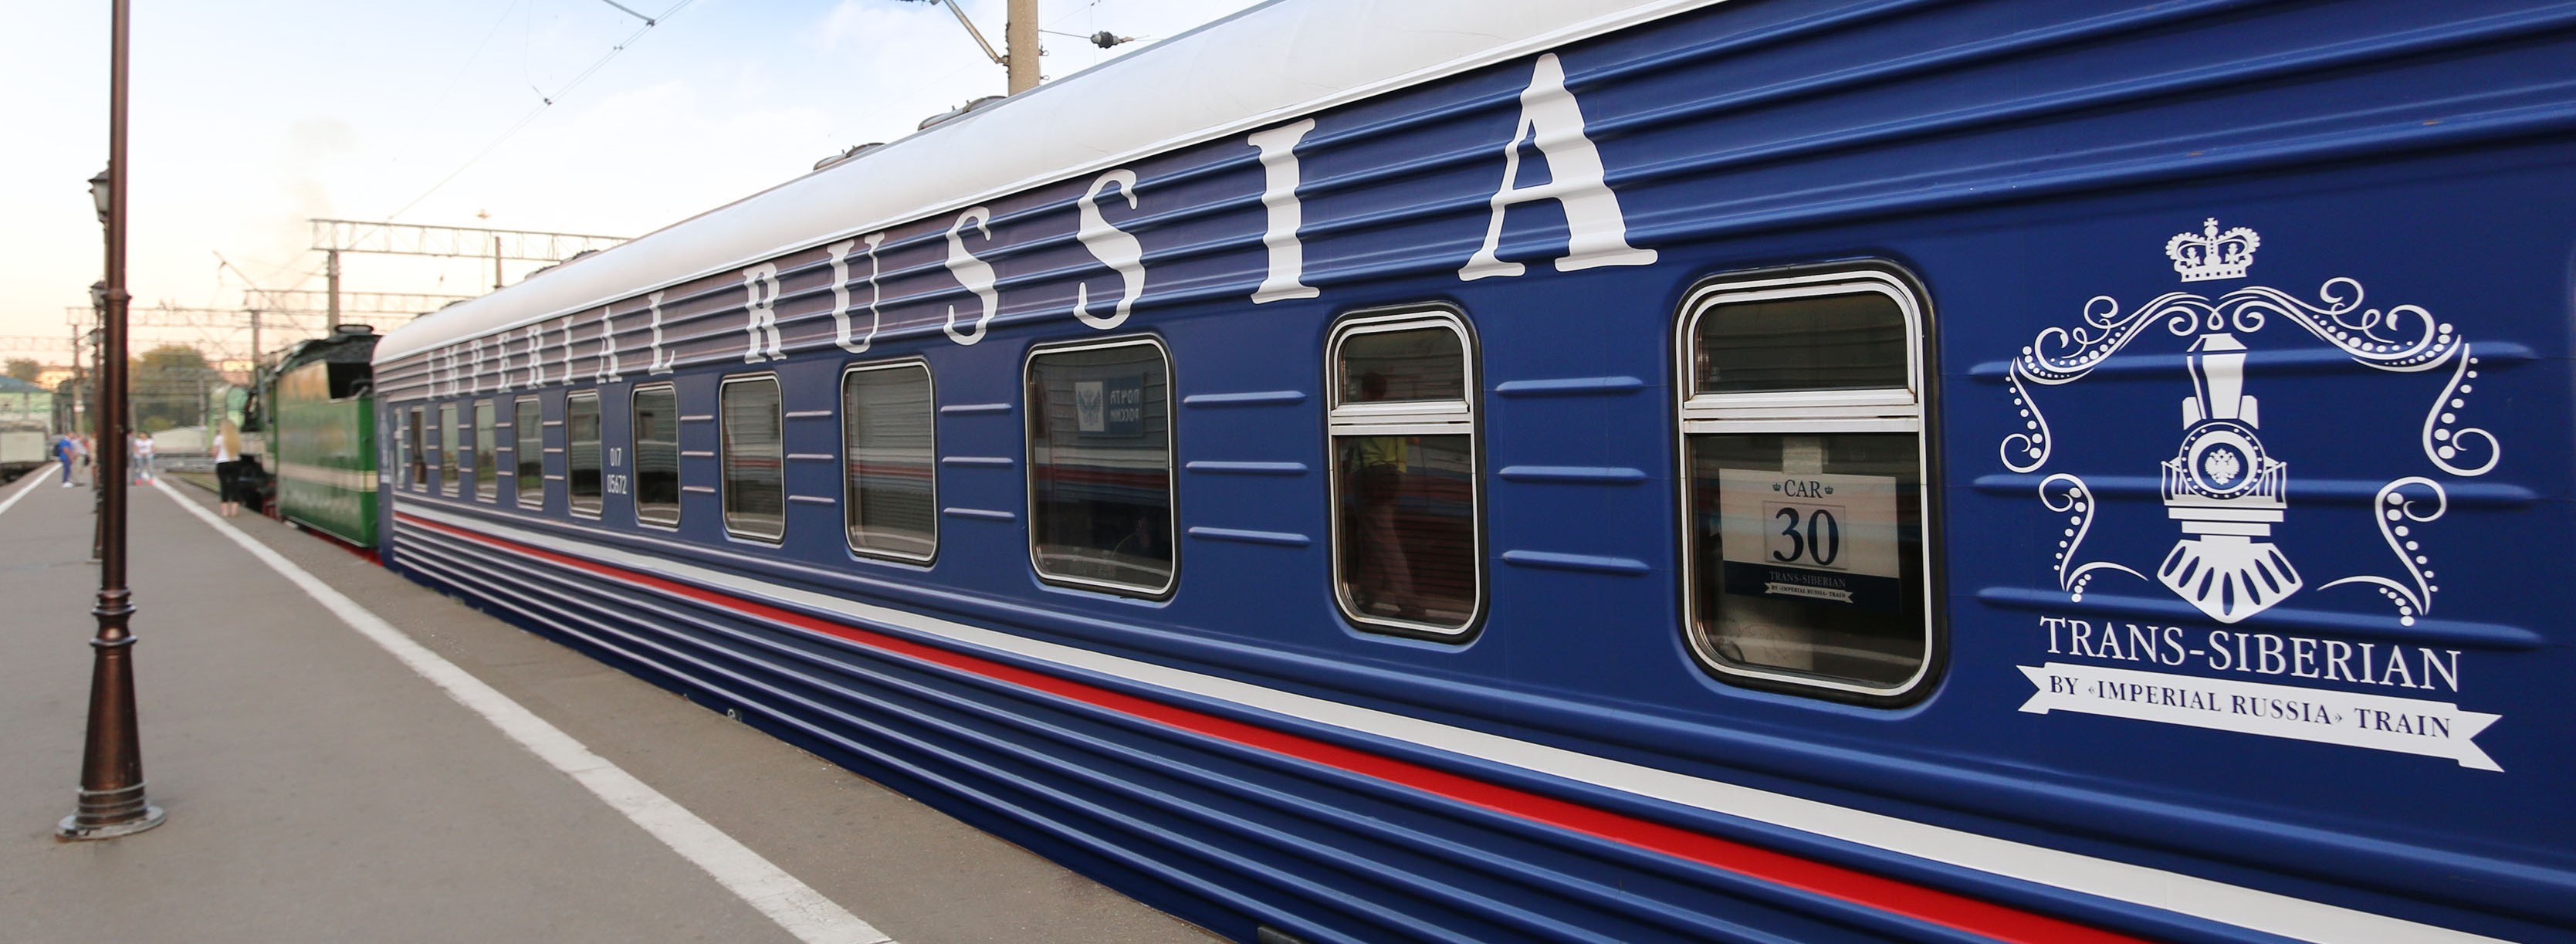 Trans-Siberian Trains Russia Train